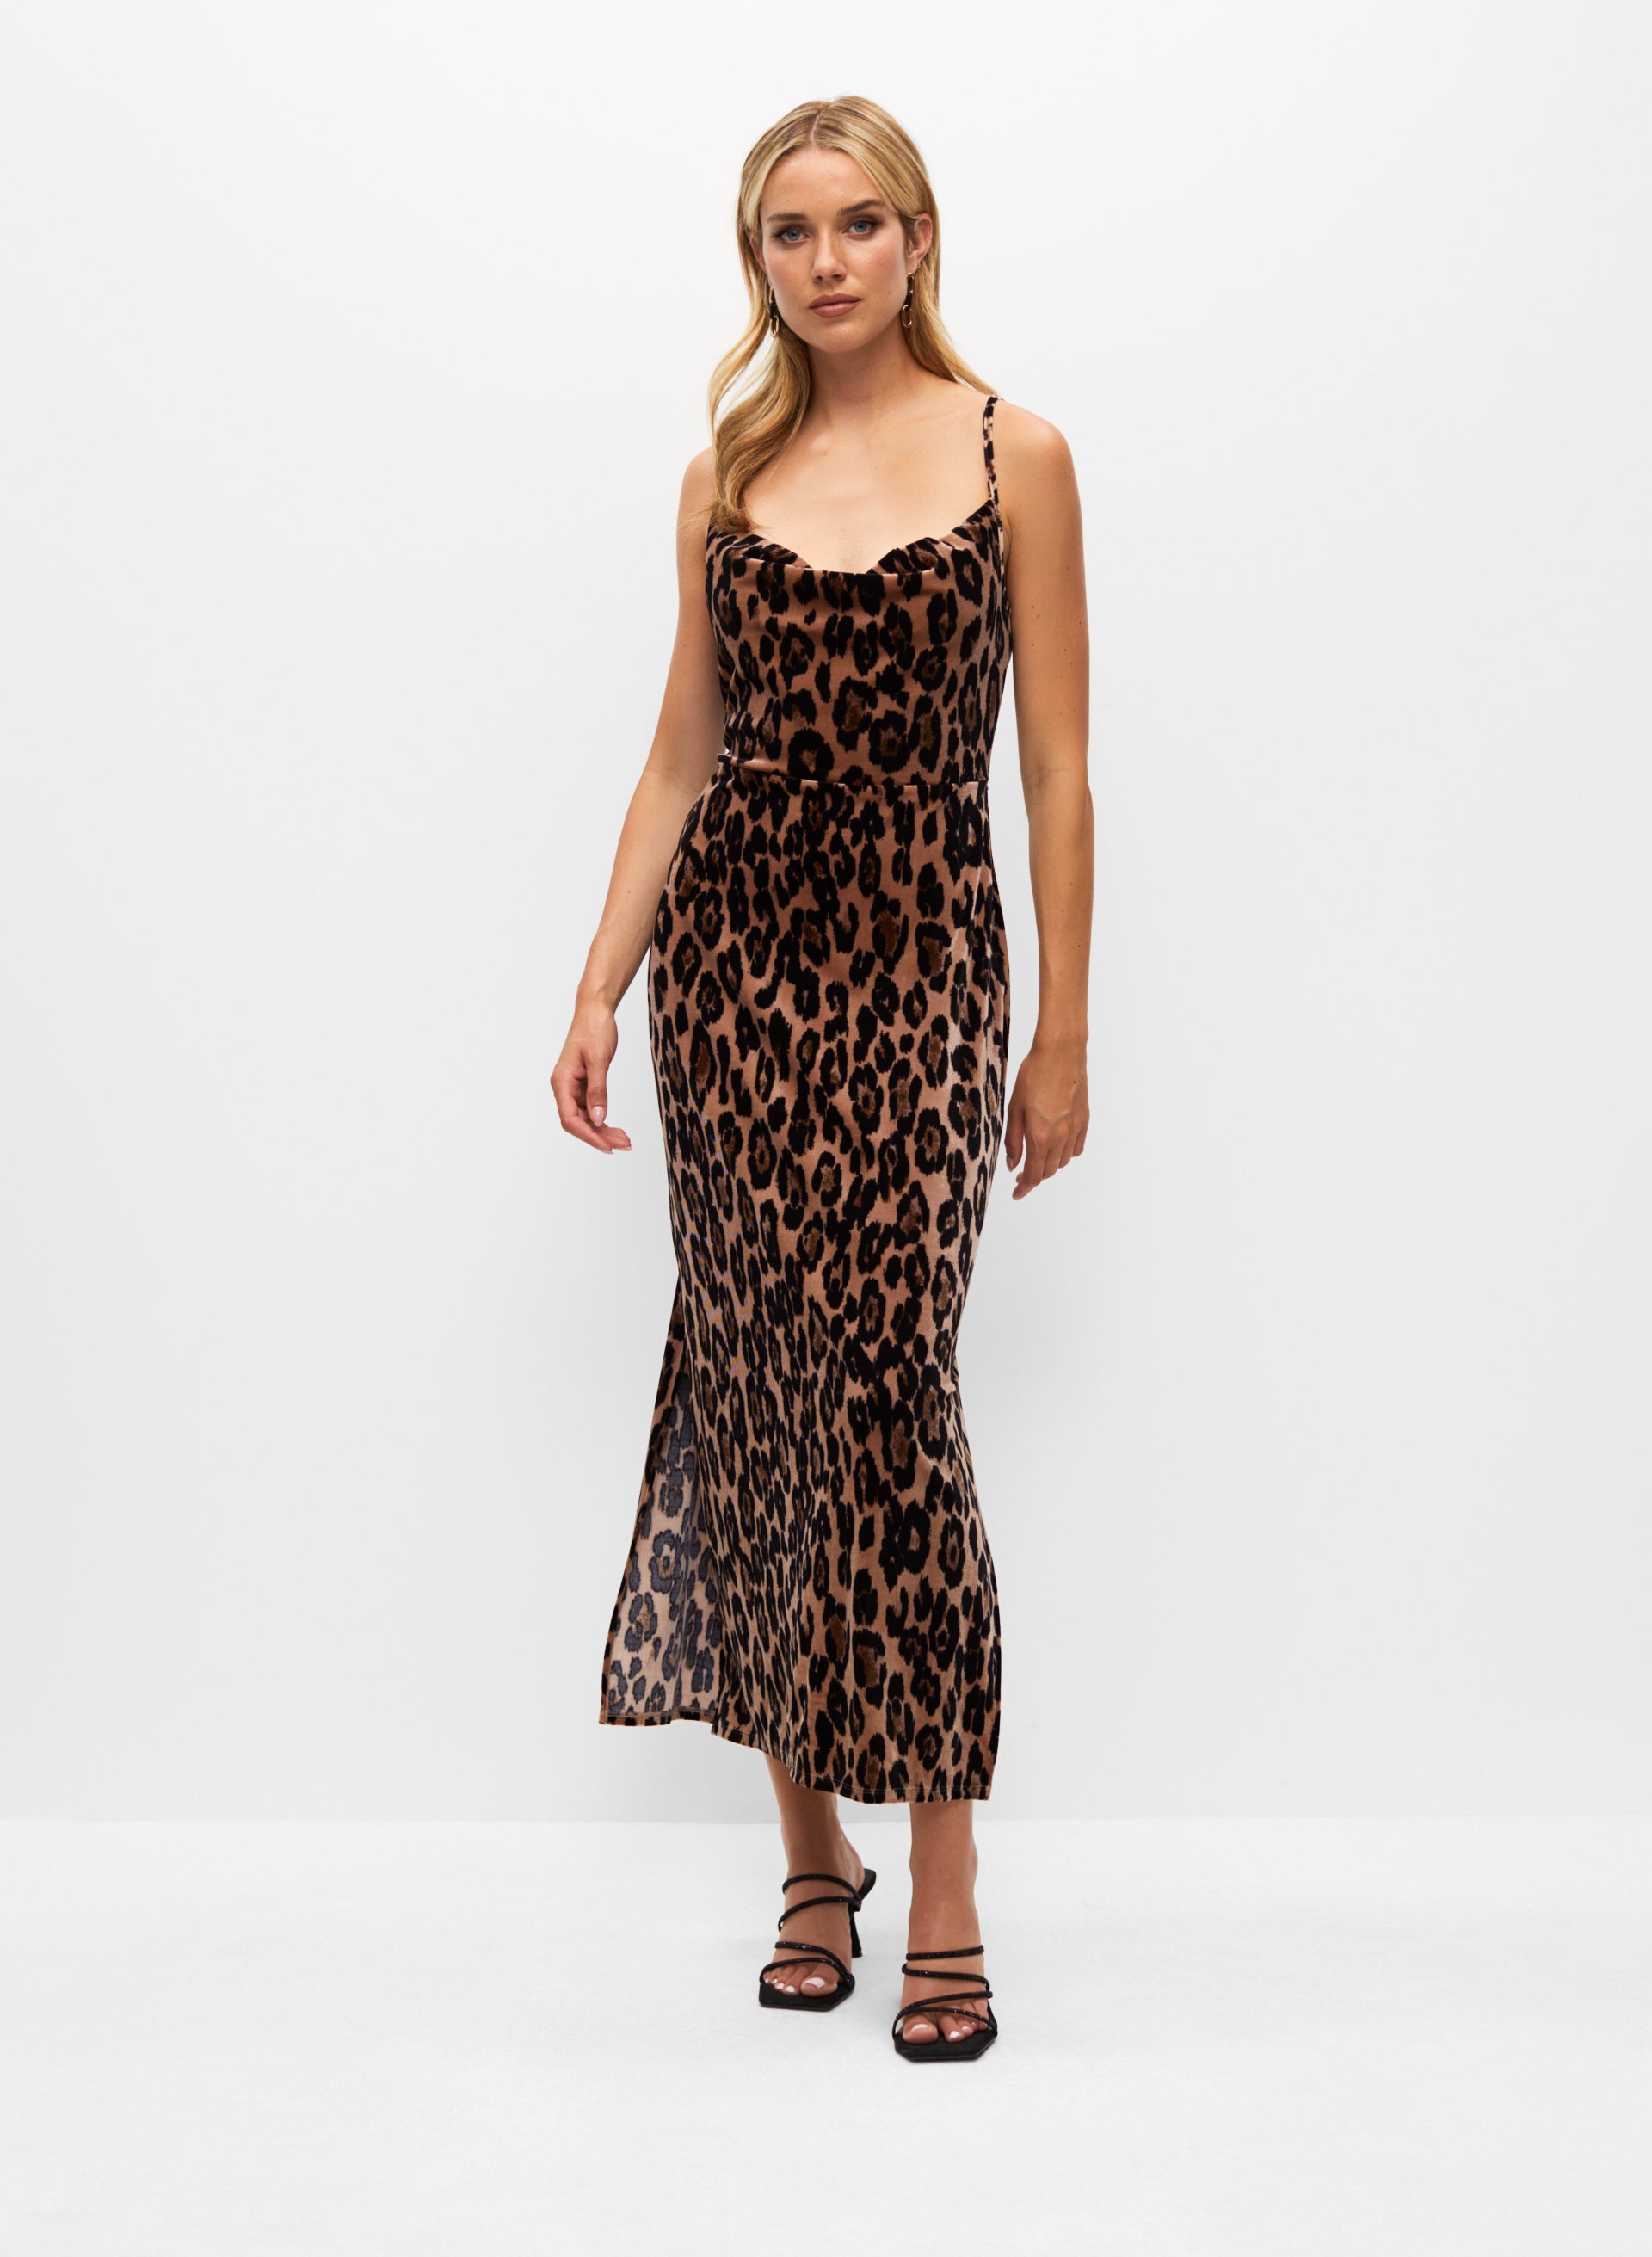 Leopard Print Stretch Velvet Dress